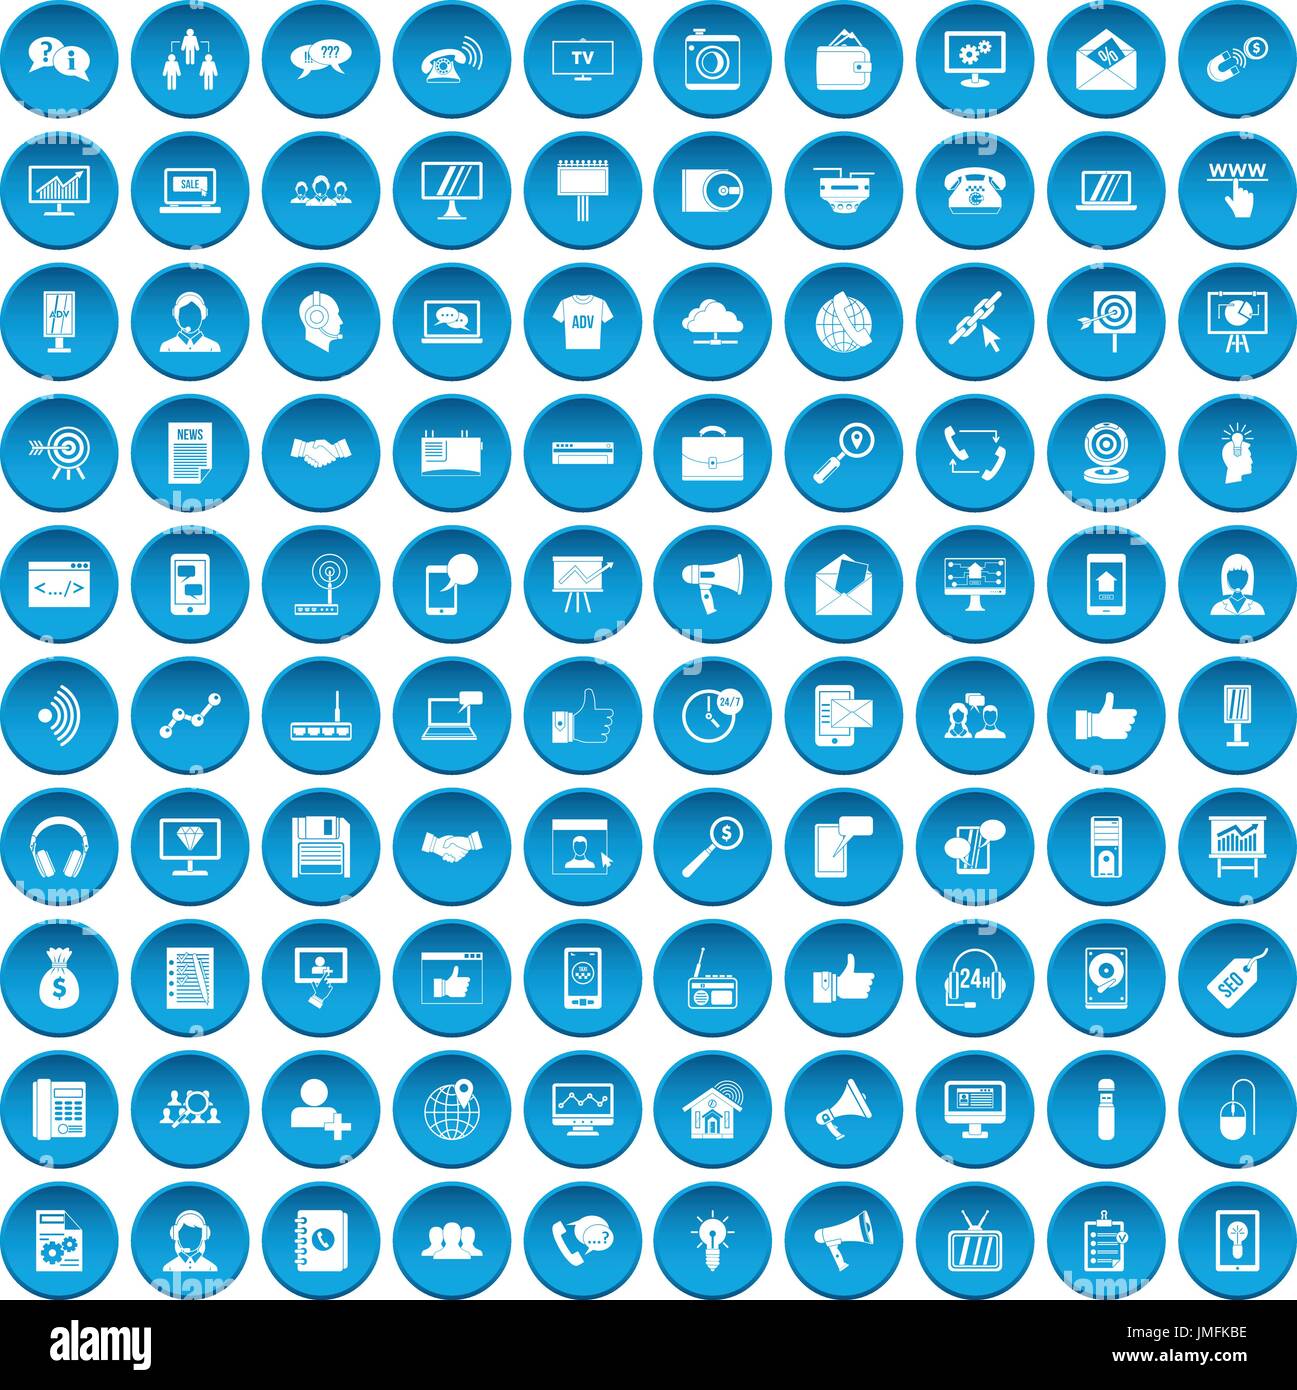 100 Help Desk Icons Set Blue Stock Vector Art Illustration